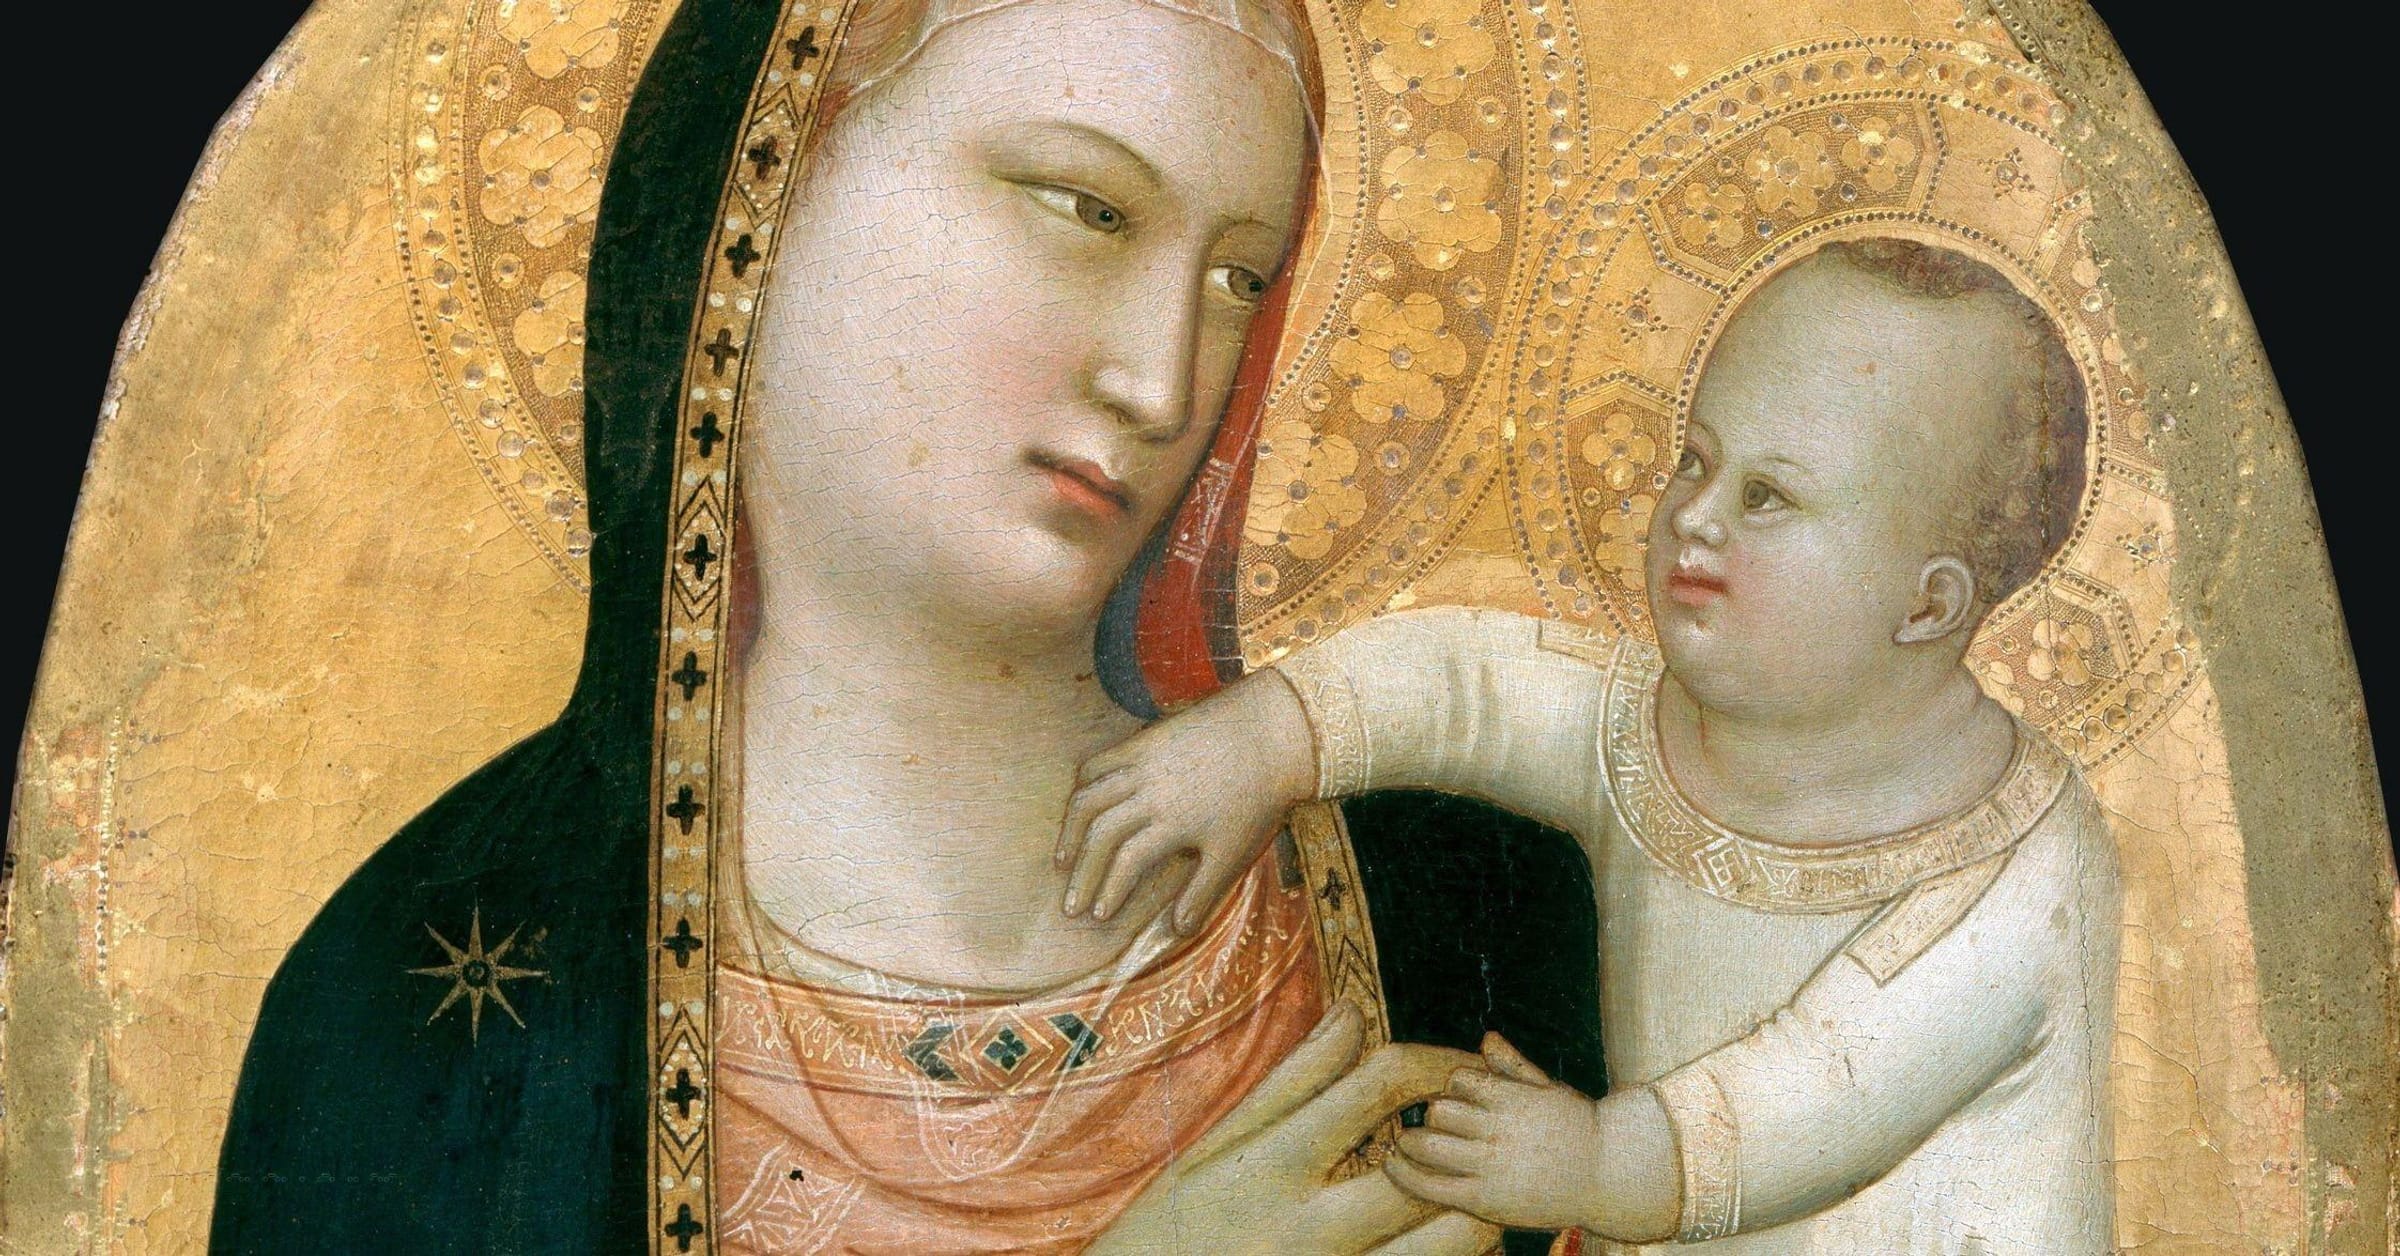 Medieval Pregnancy Advice That Is Beyond Disturbing